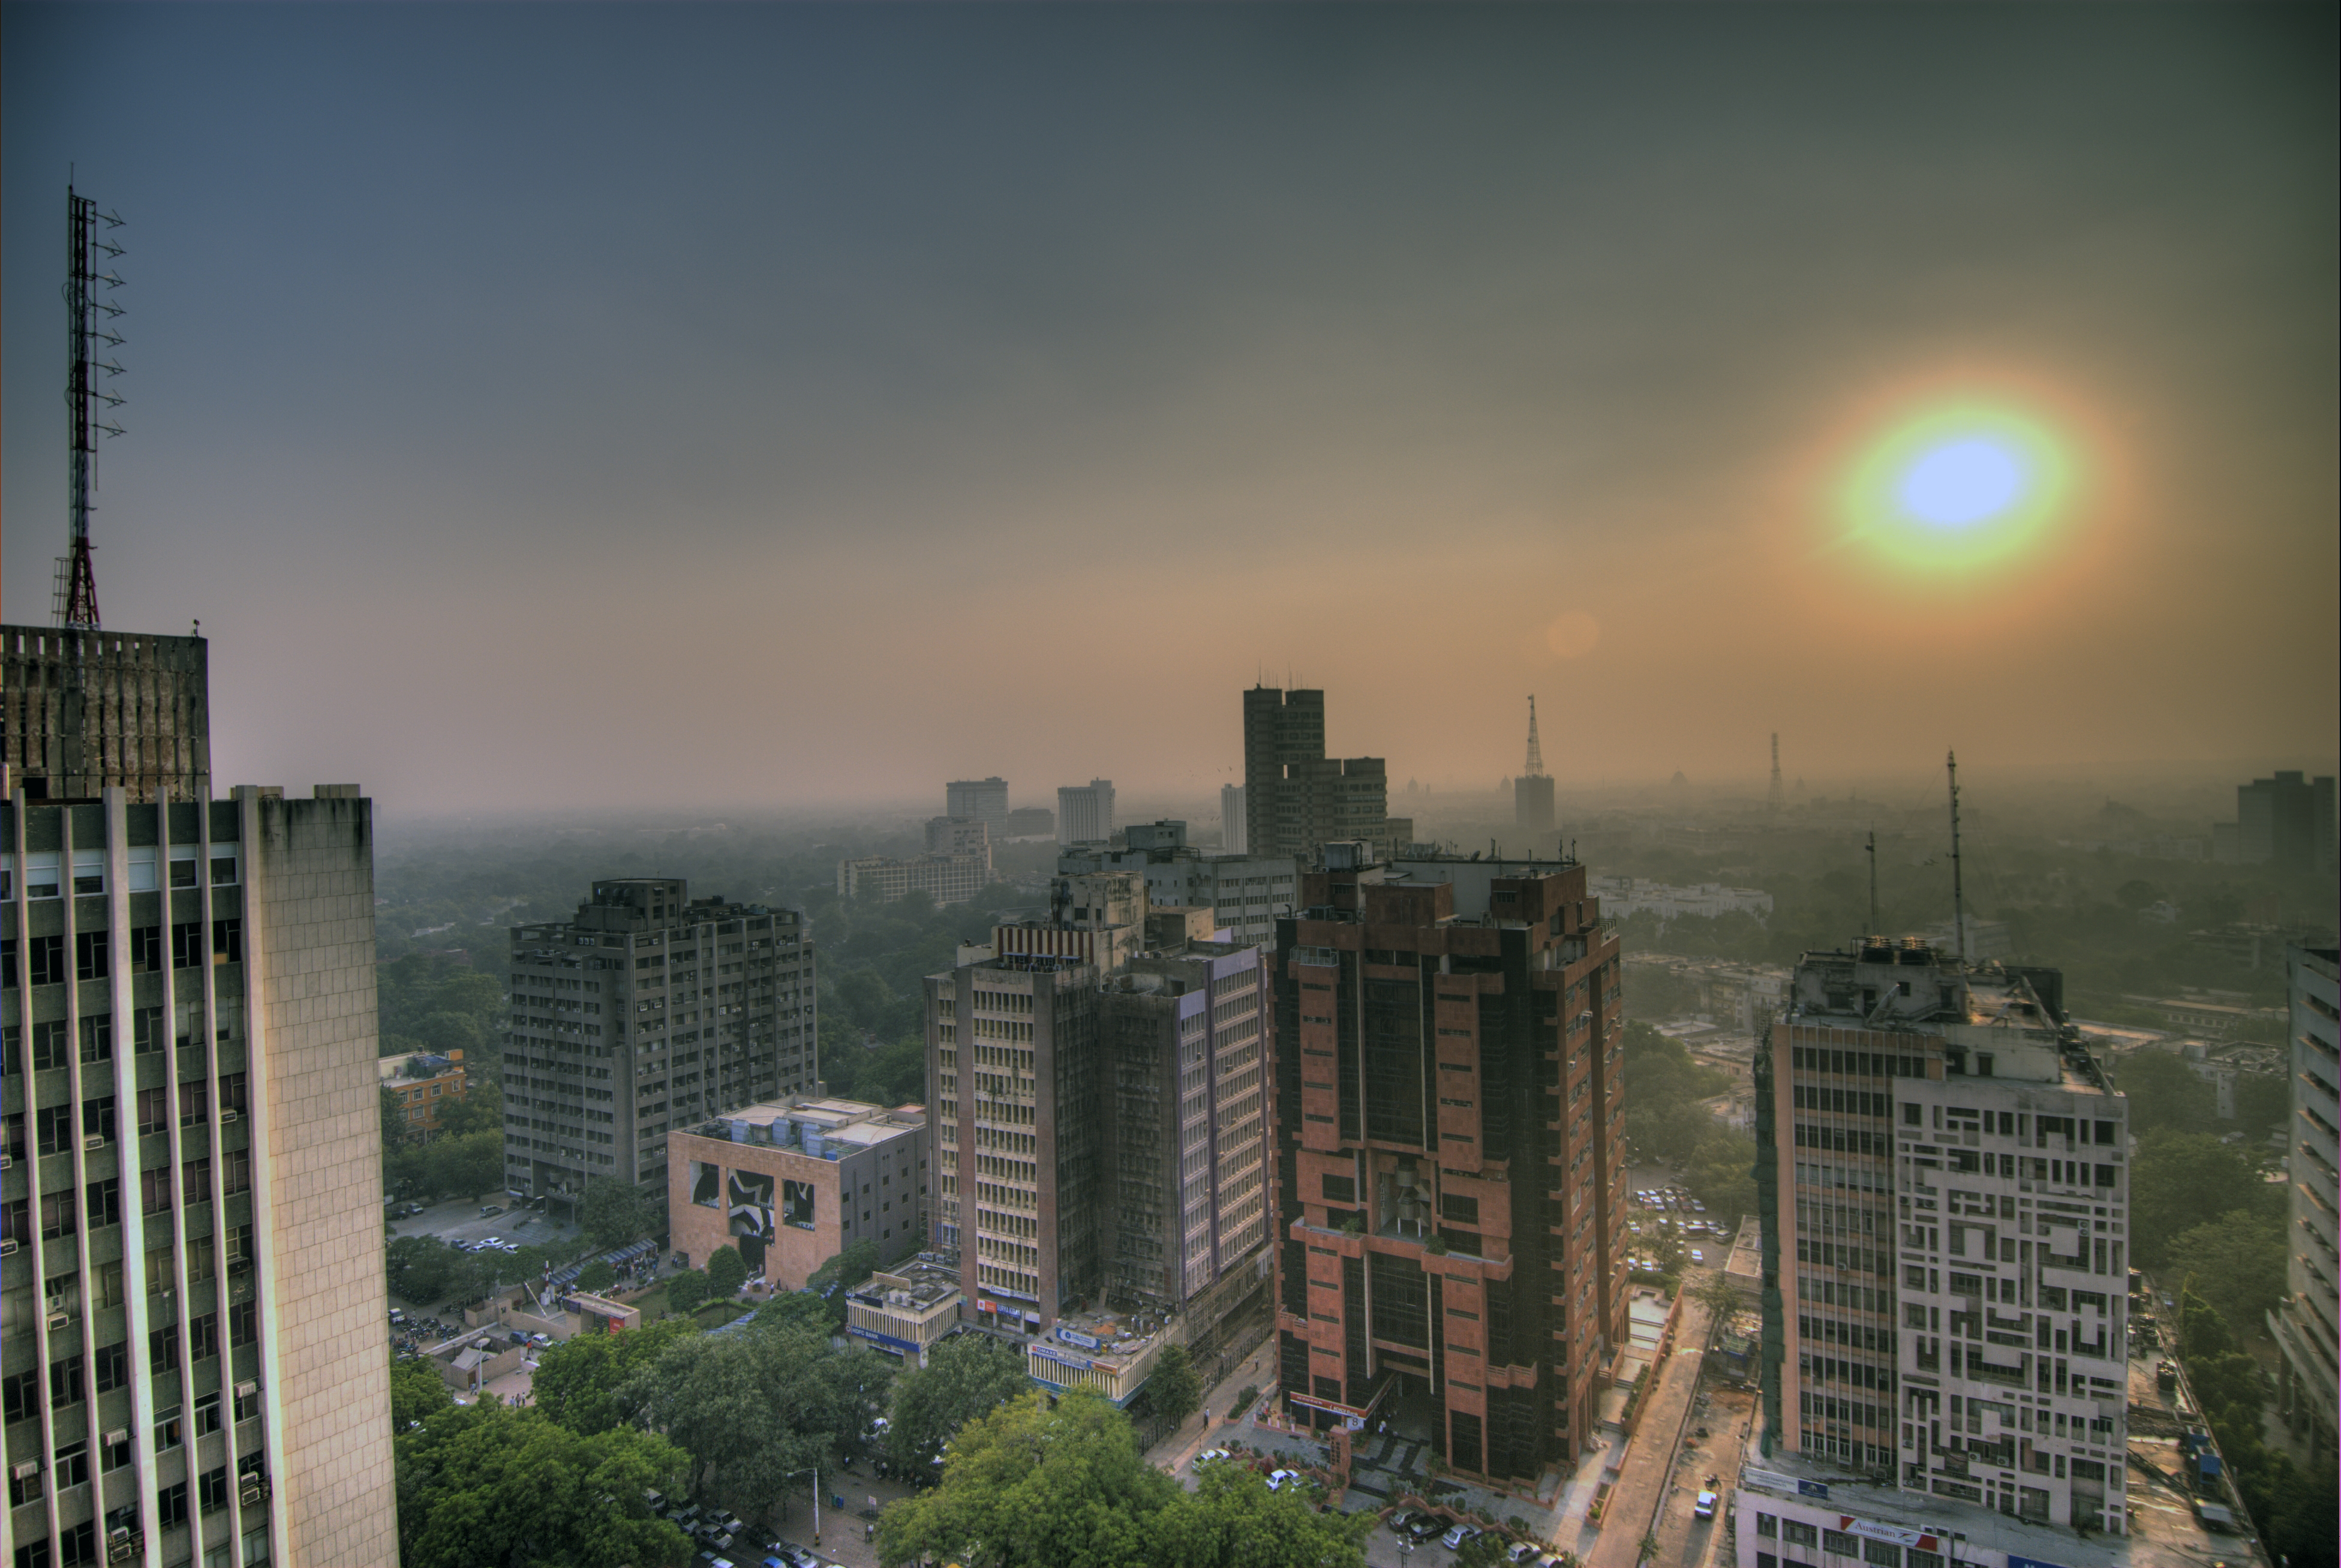 Smog in the skies of Delhi, India